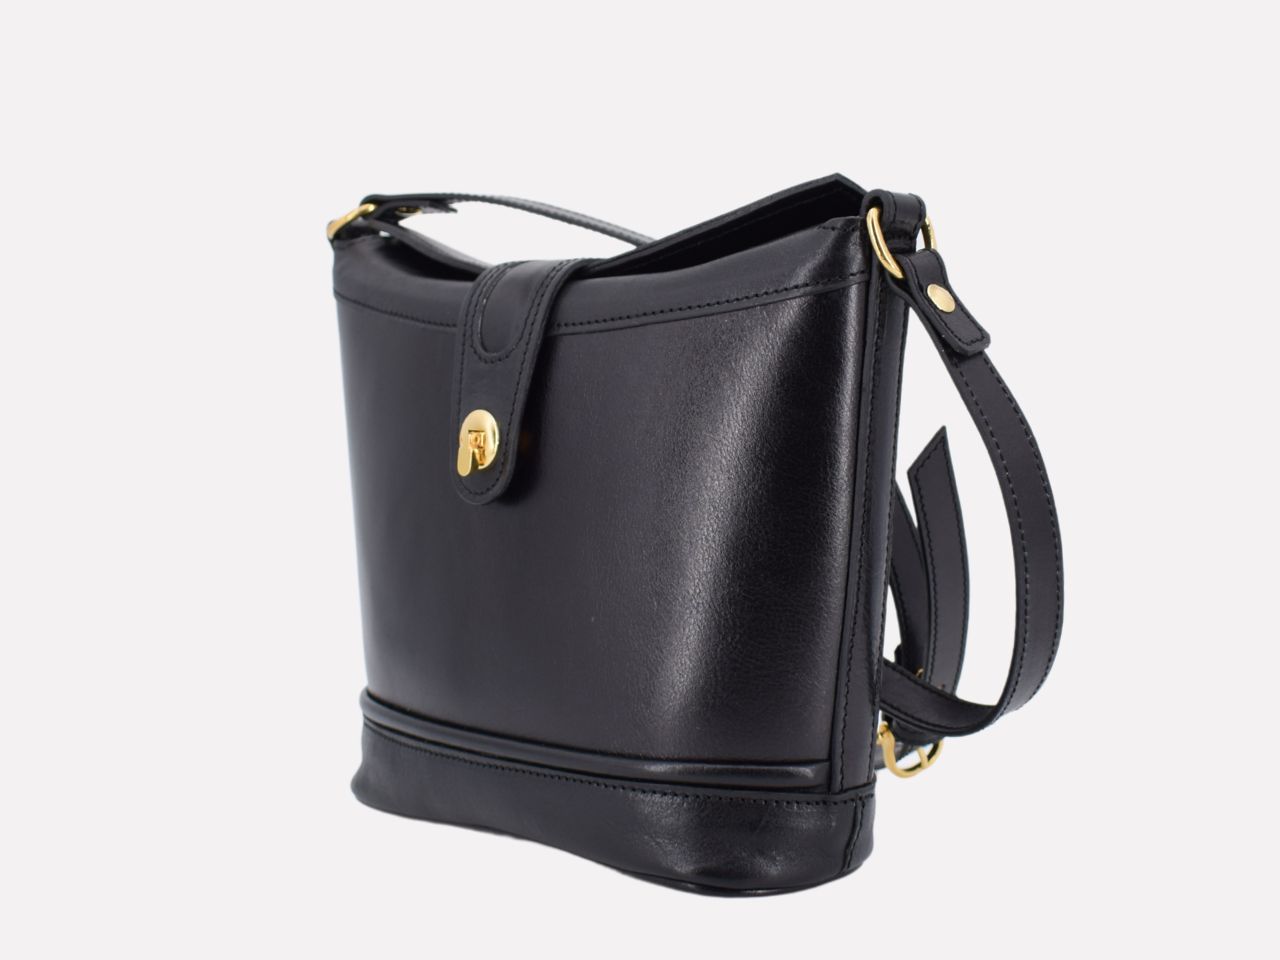 Aura, Italian leather "bucket" handbag designed and handcrafted in Rome by Riccardo Mancini